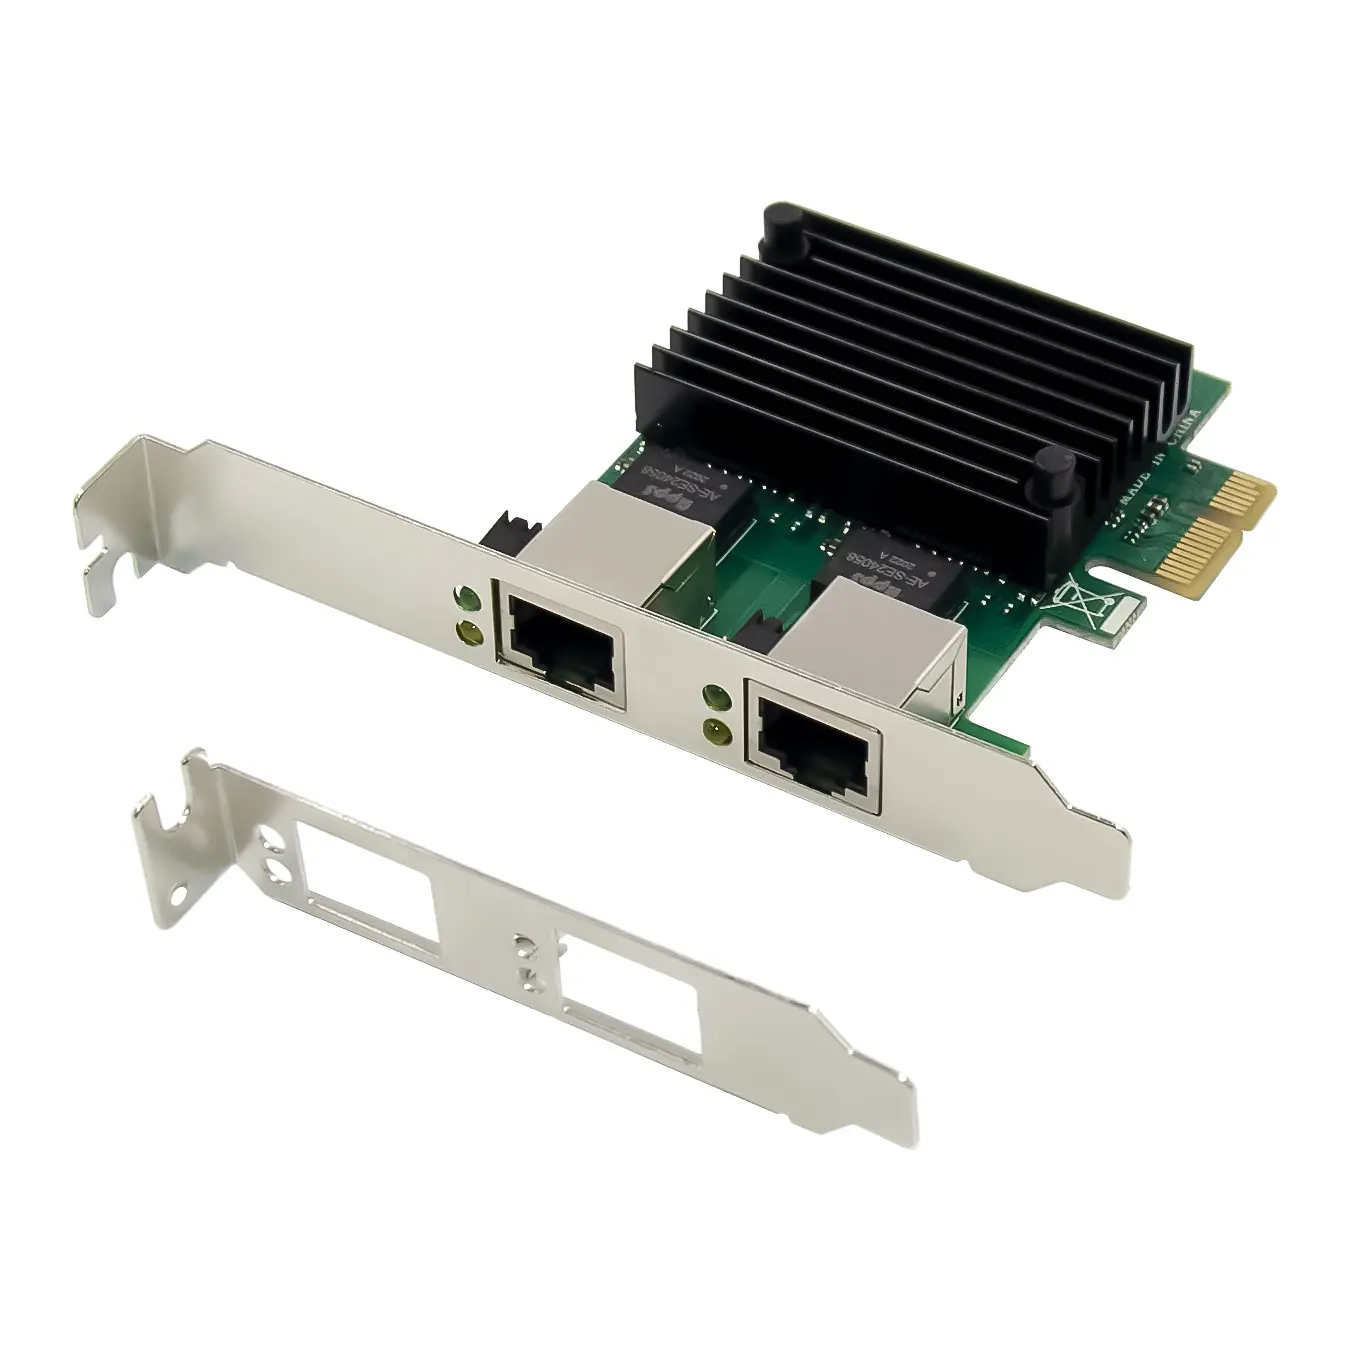 SUNWEIT ST7236 PCI Express RTL8125, adaptor jaringan dua port 10/100/1000M/2.5G